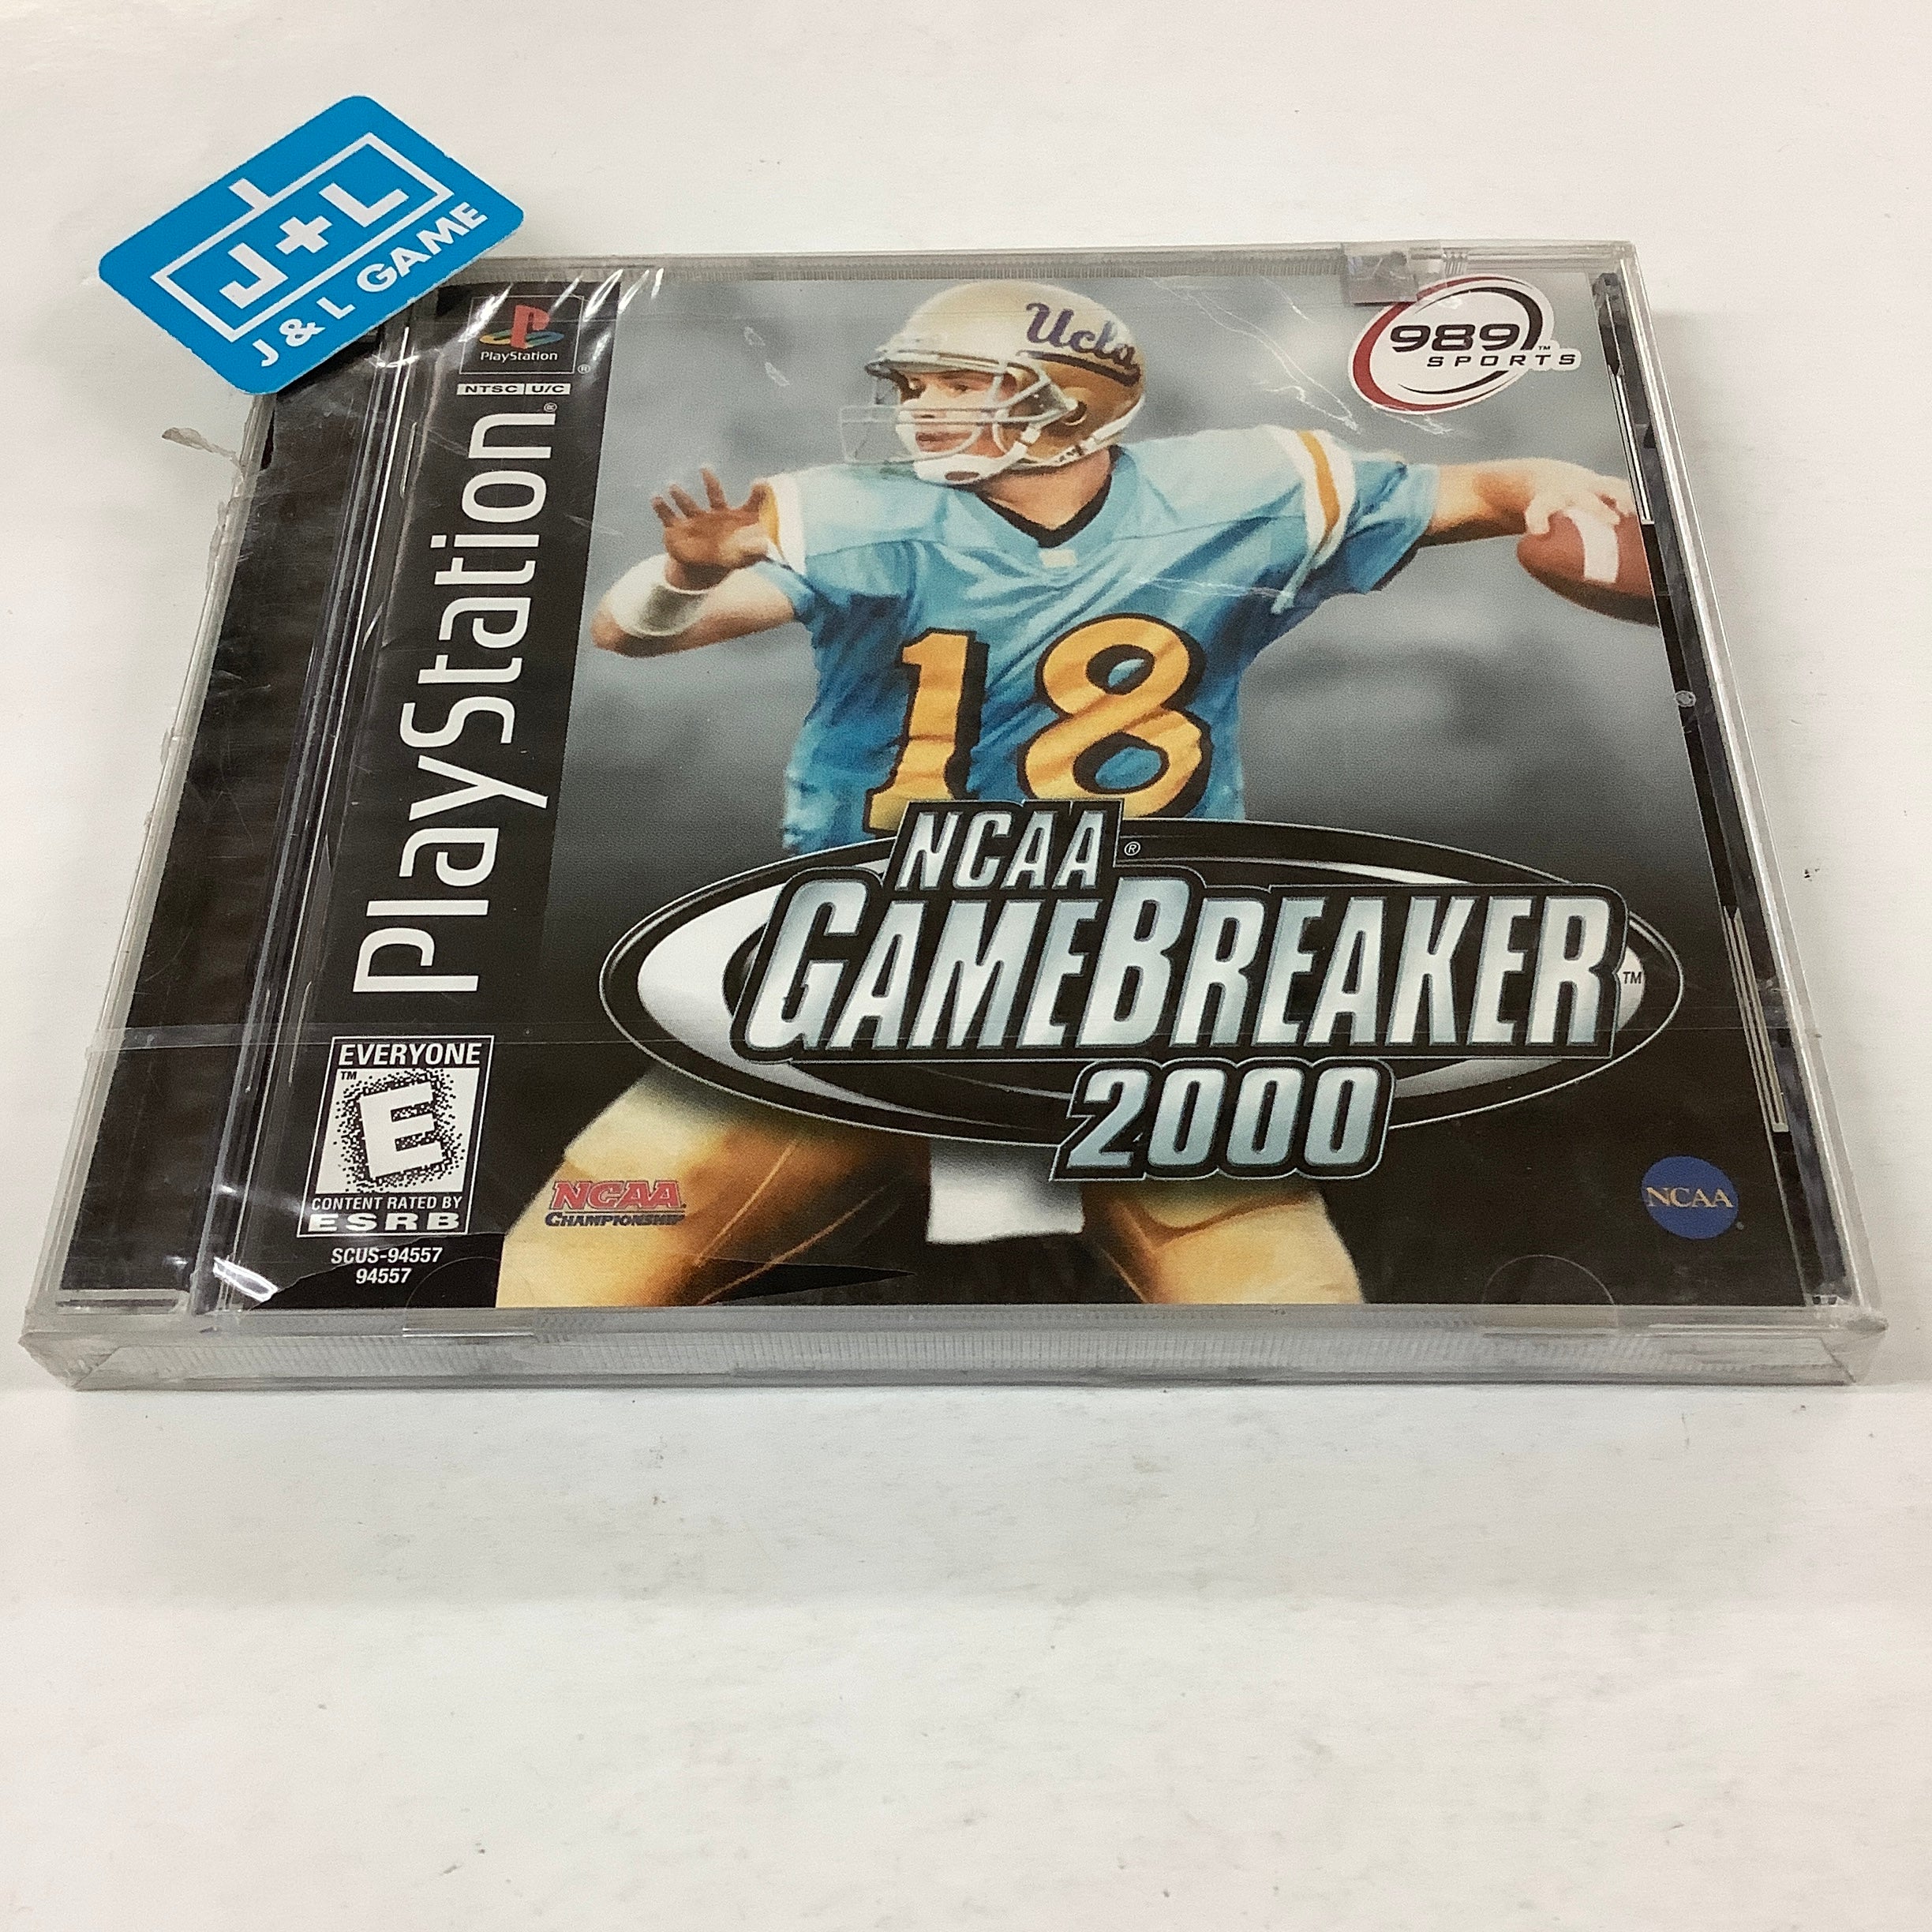 NCAA GameBreaker 2000 - (PS1) PlayStation 1 Video Games 989 Sports   